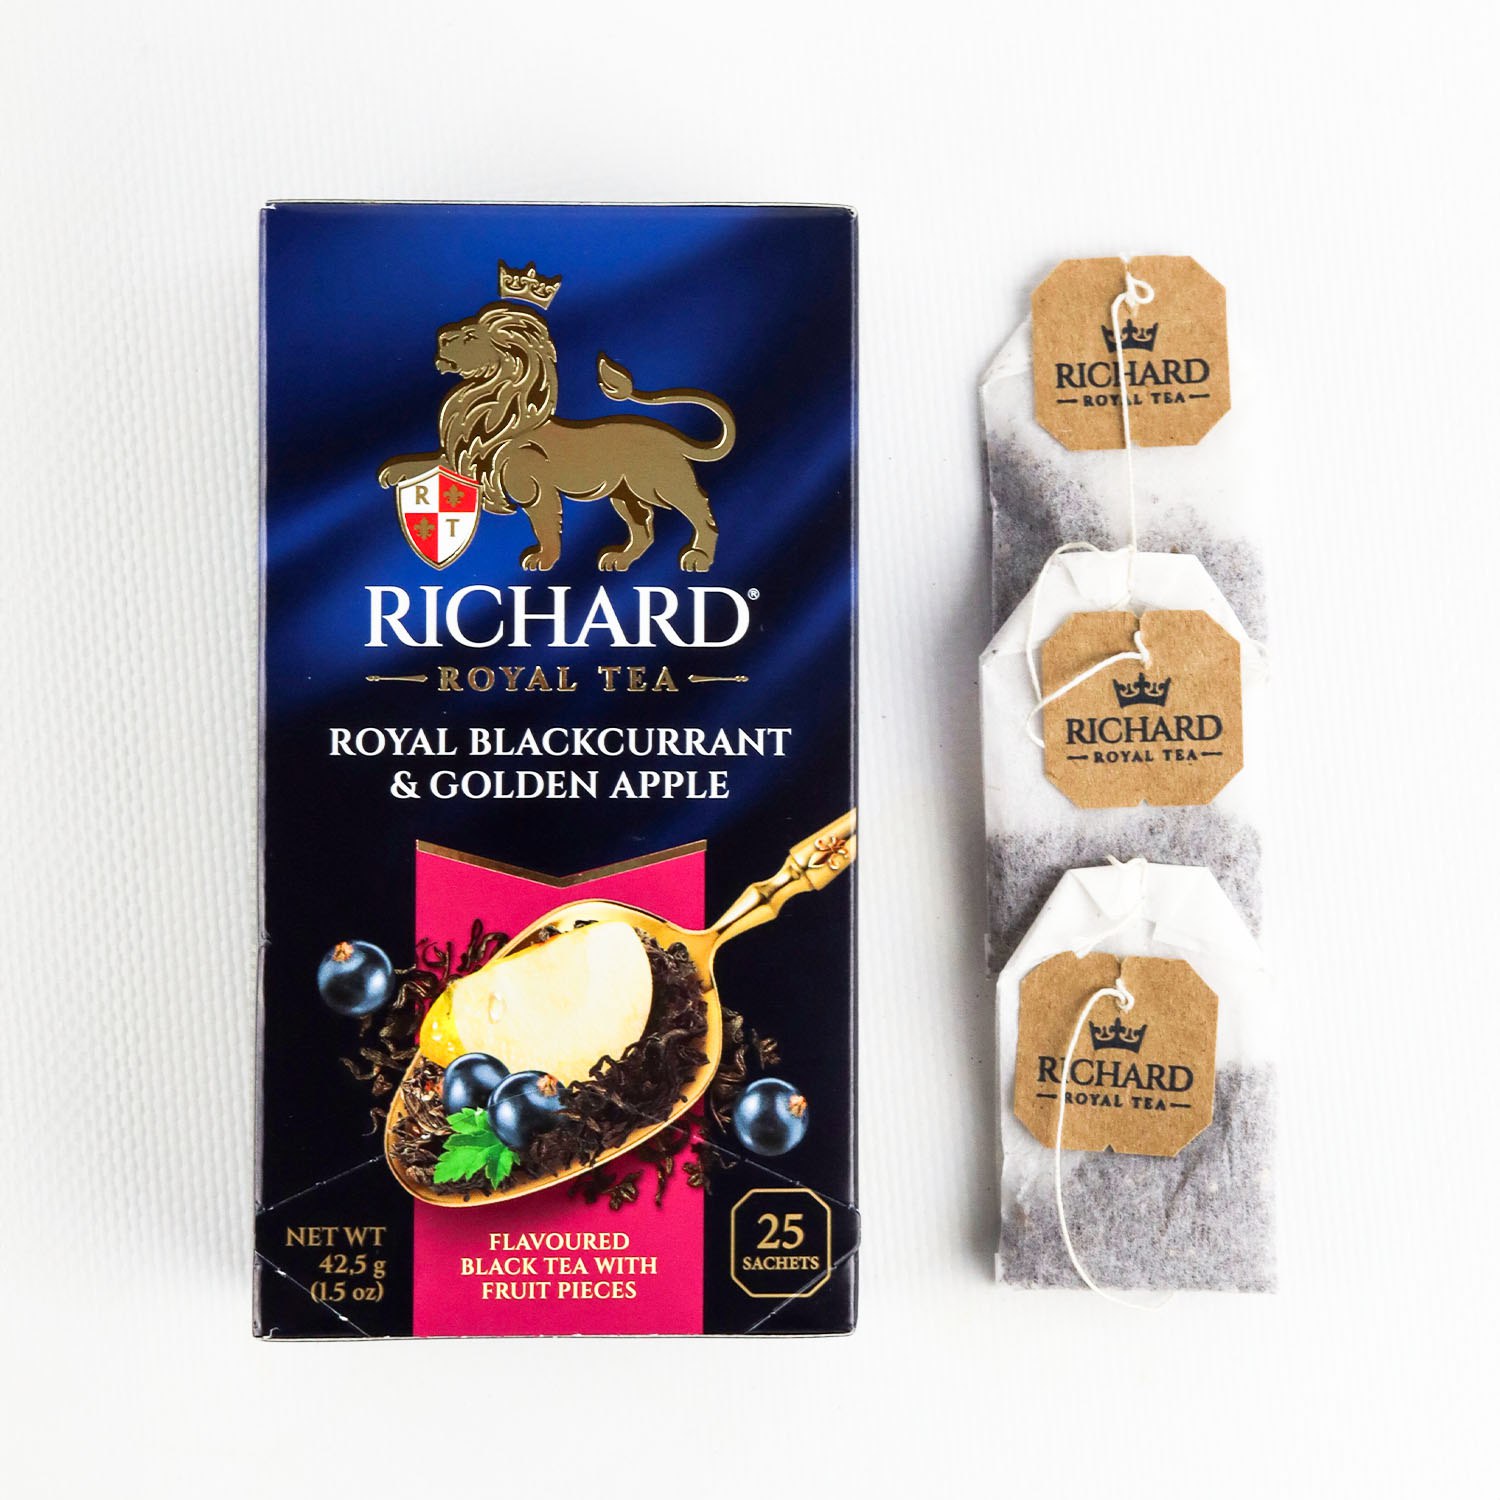 Richard Royal Blackcurrant & Golden Apple flavored tea